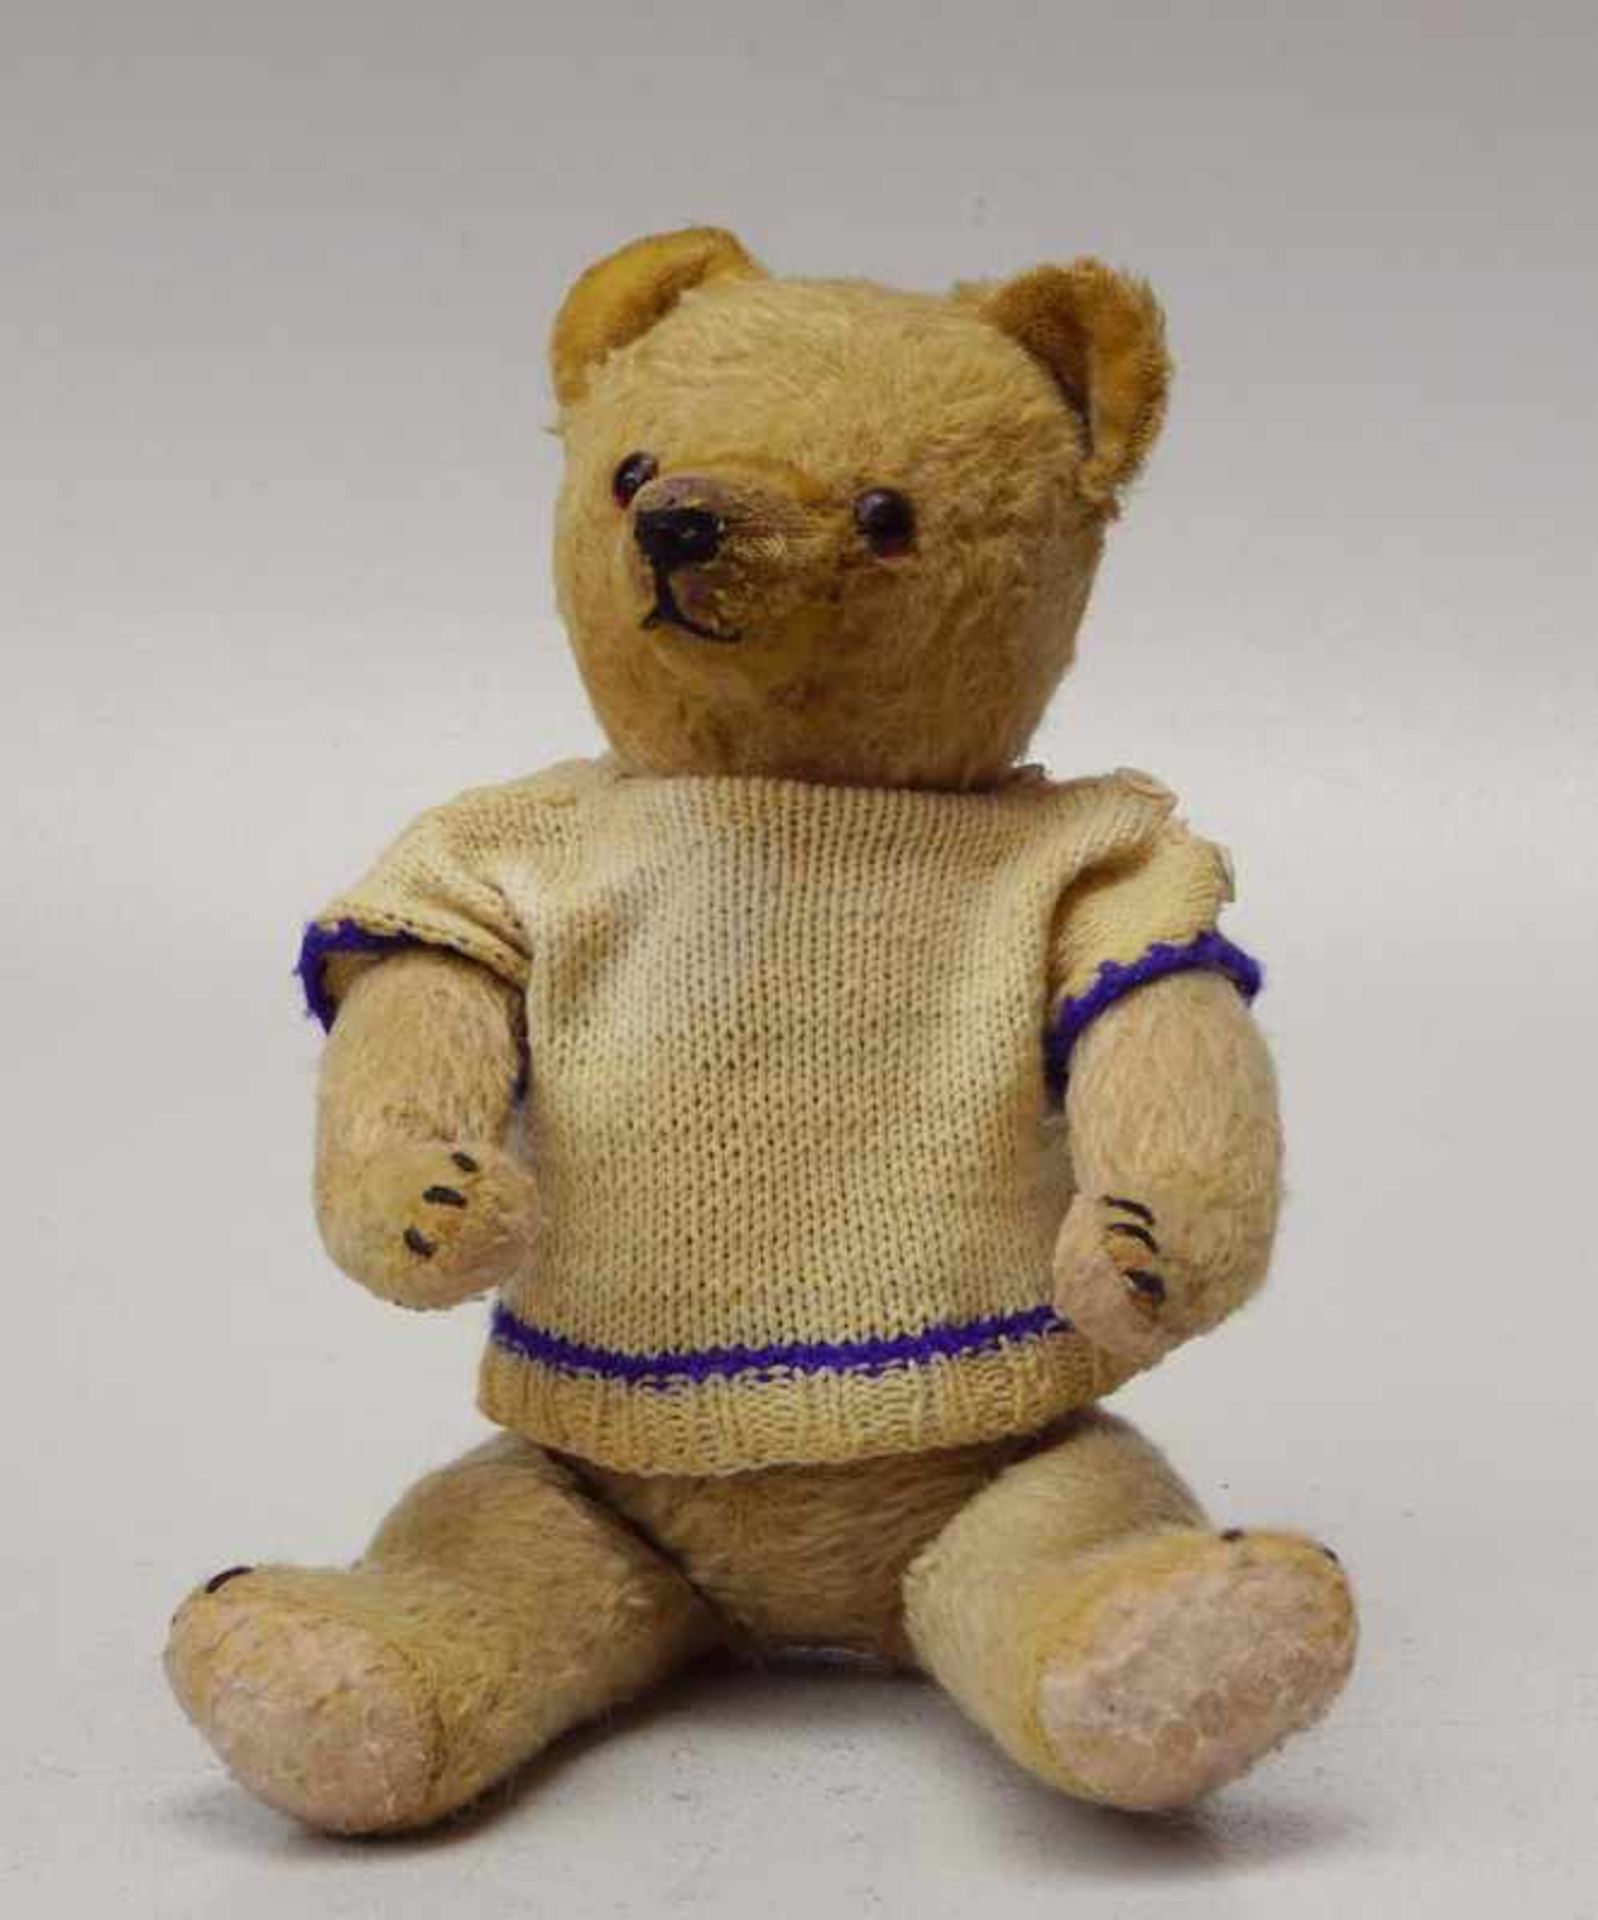 40: Großer Teddybär wohl Steiff Hellbraunes Fell (min. abgegriffen), Arme & Beine 360 Grad